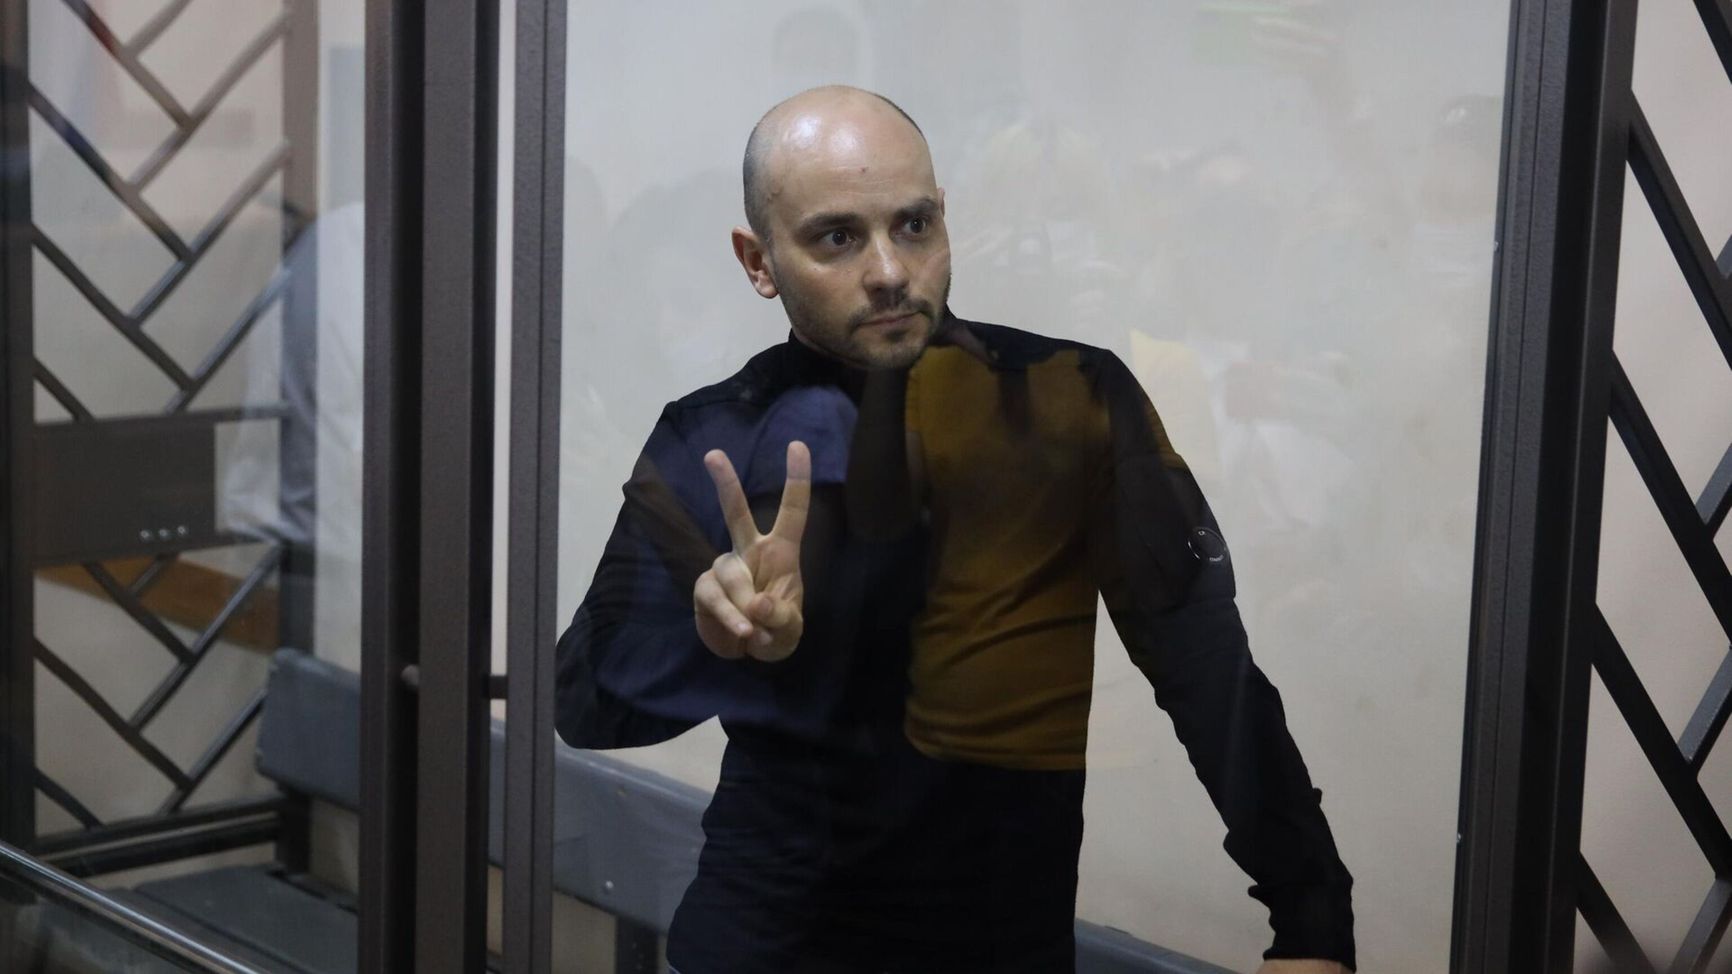 Andrei Pivovarov in court